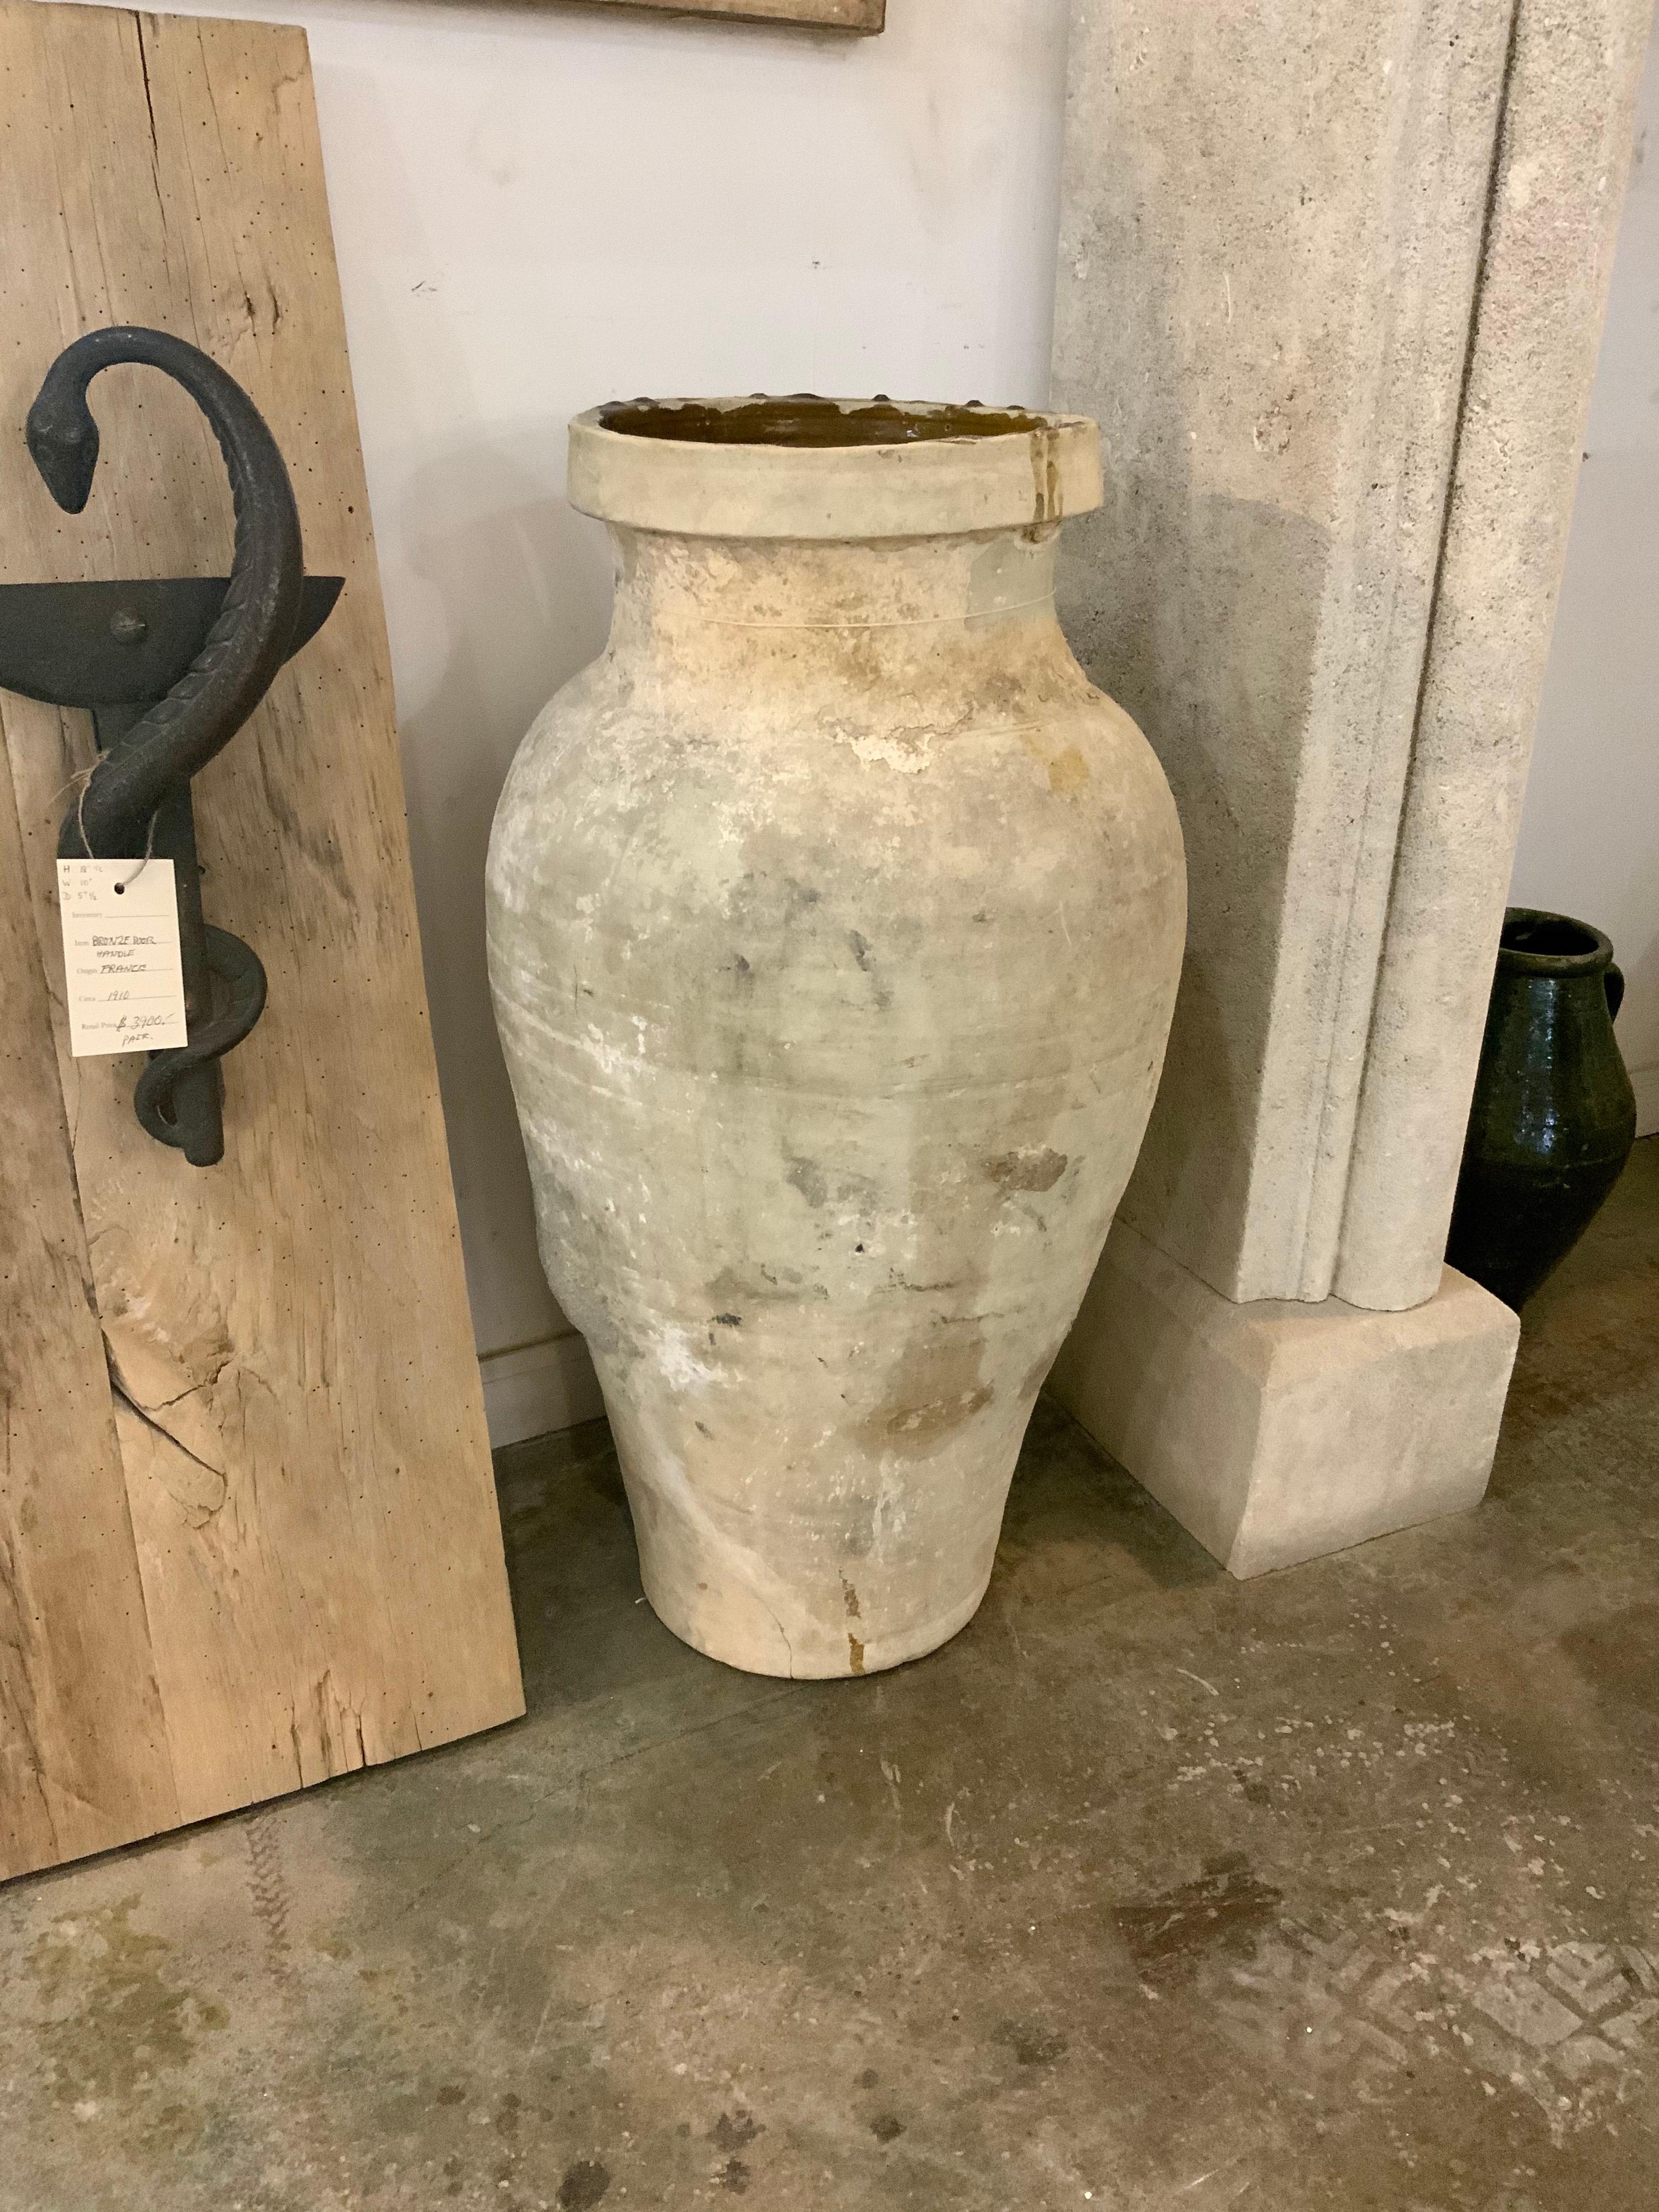 This Terracotta urn origins from Spain.

